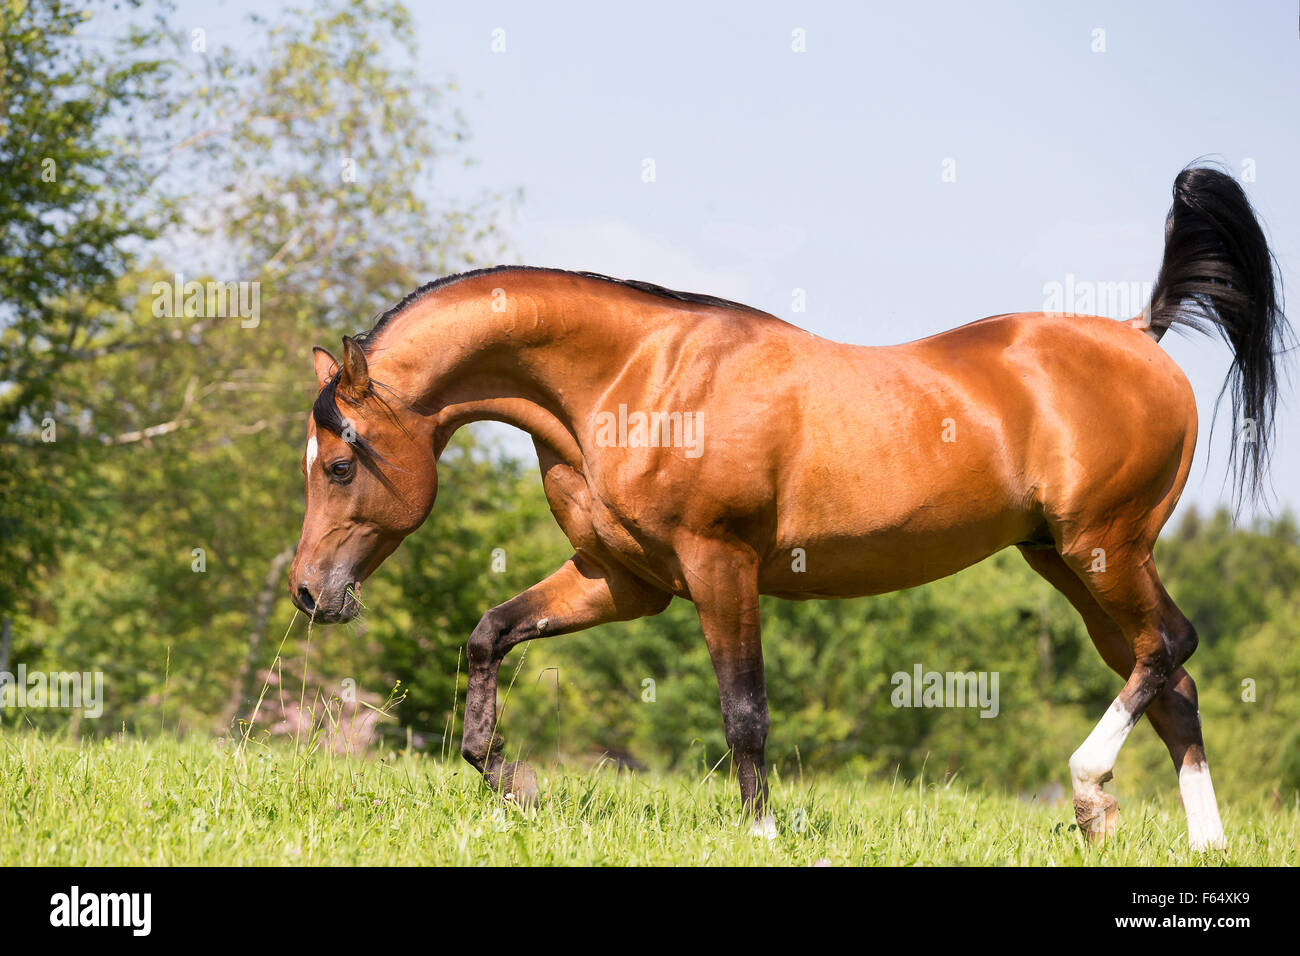 Arab Horse, Arabian Horse. Bay stallion performing display behaviour on a pasture. Switzerland Stock Photo